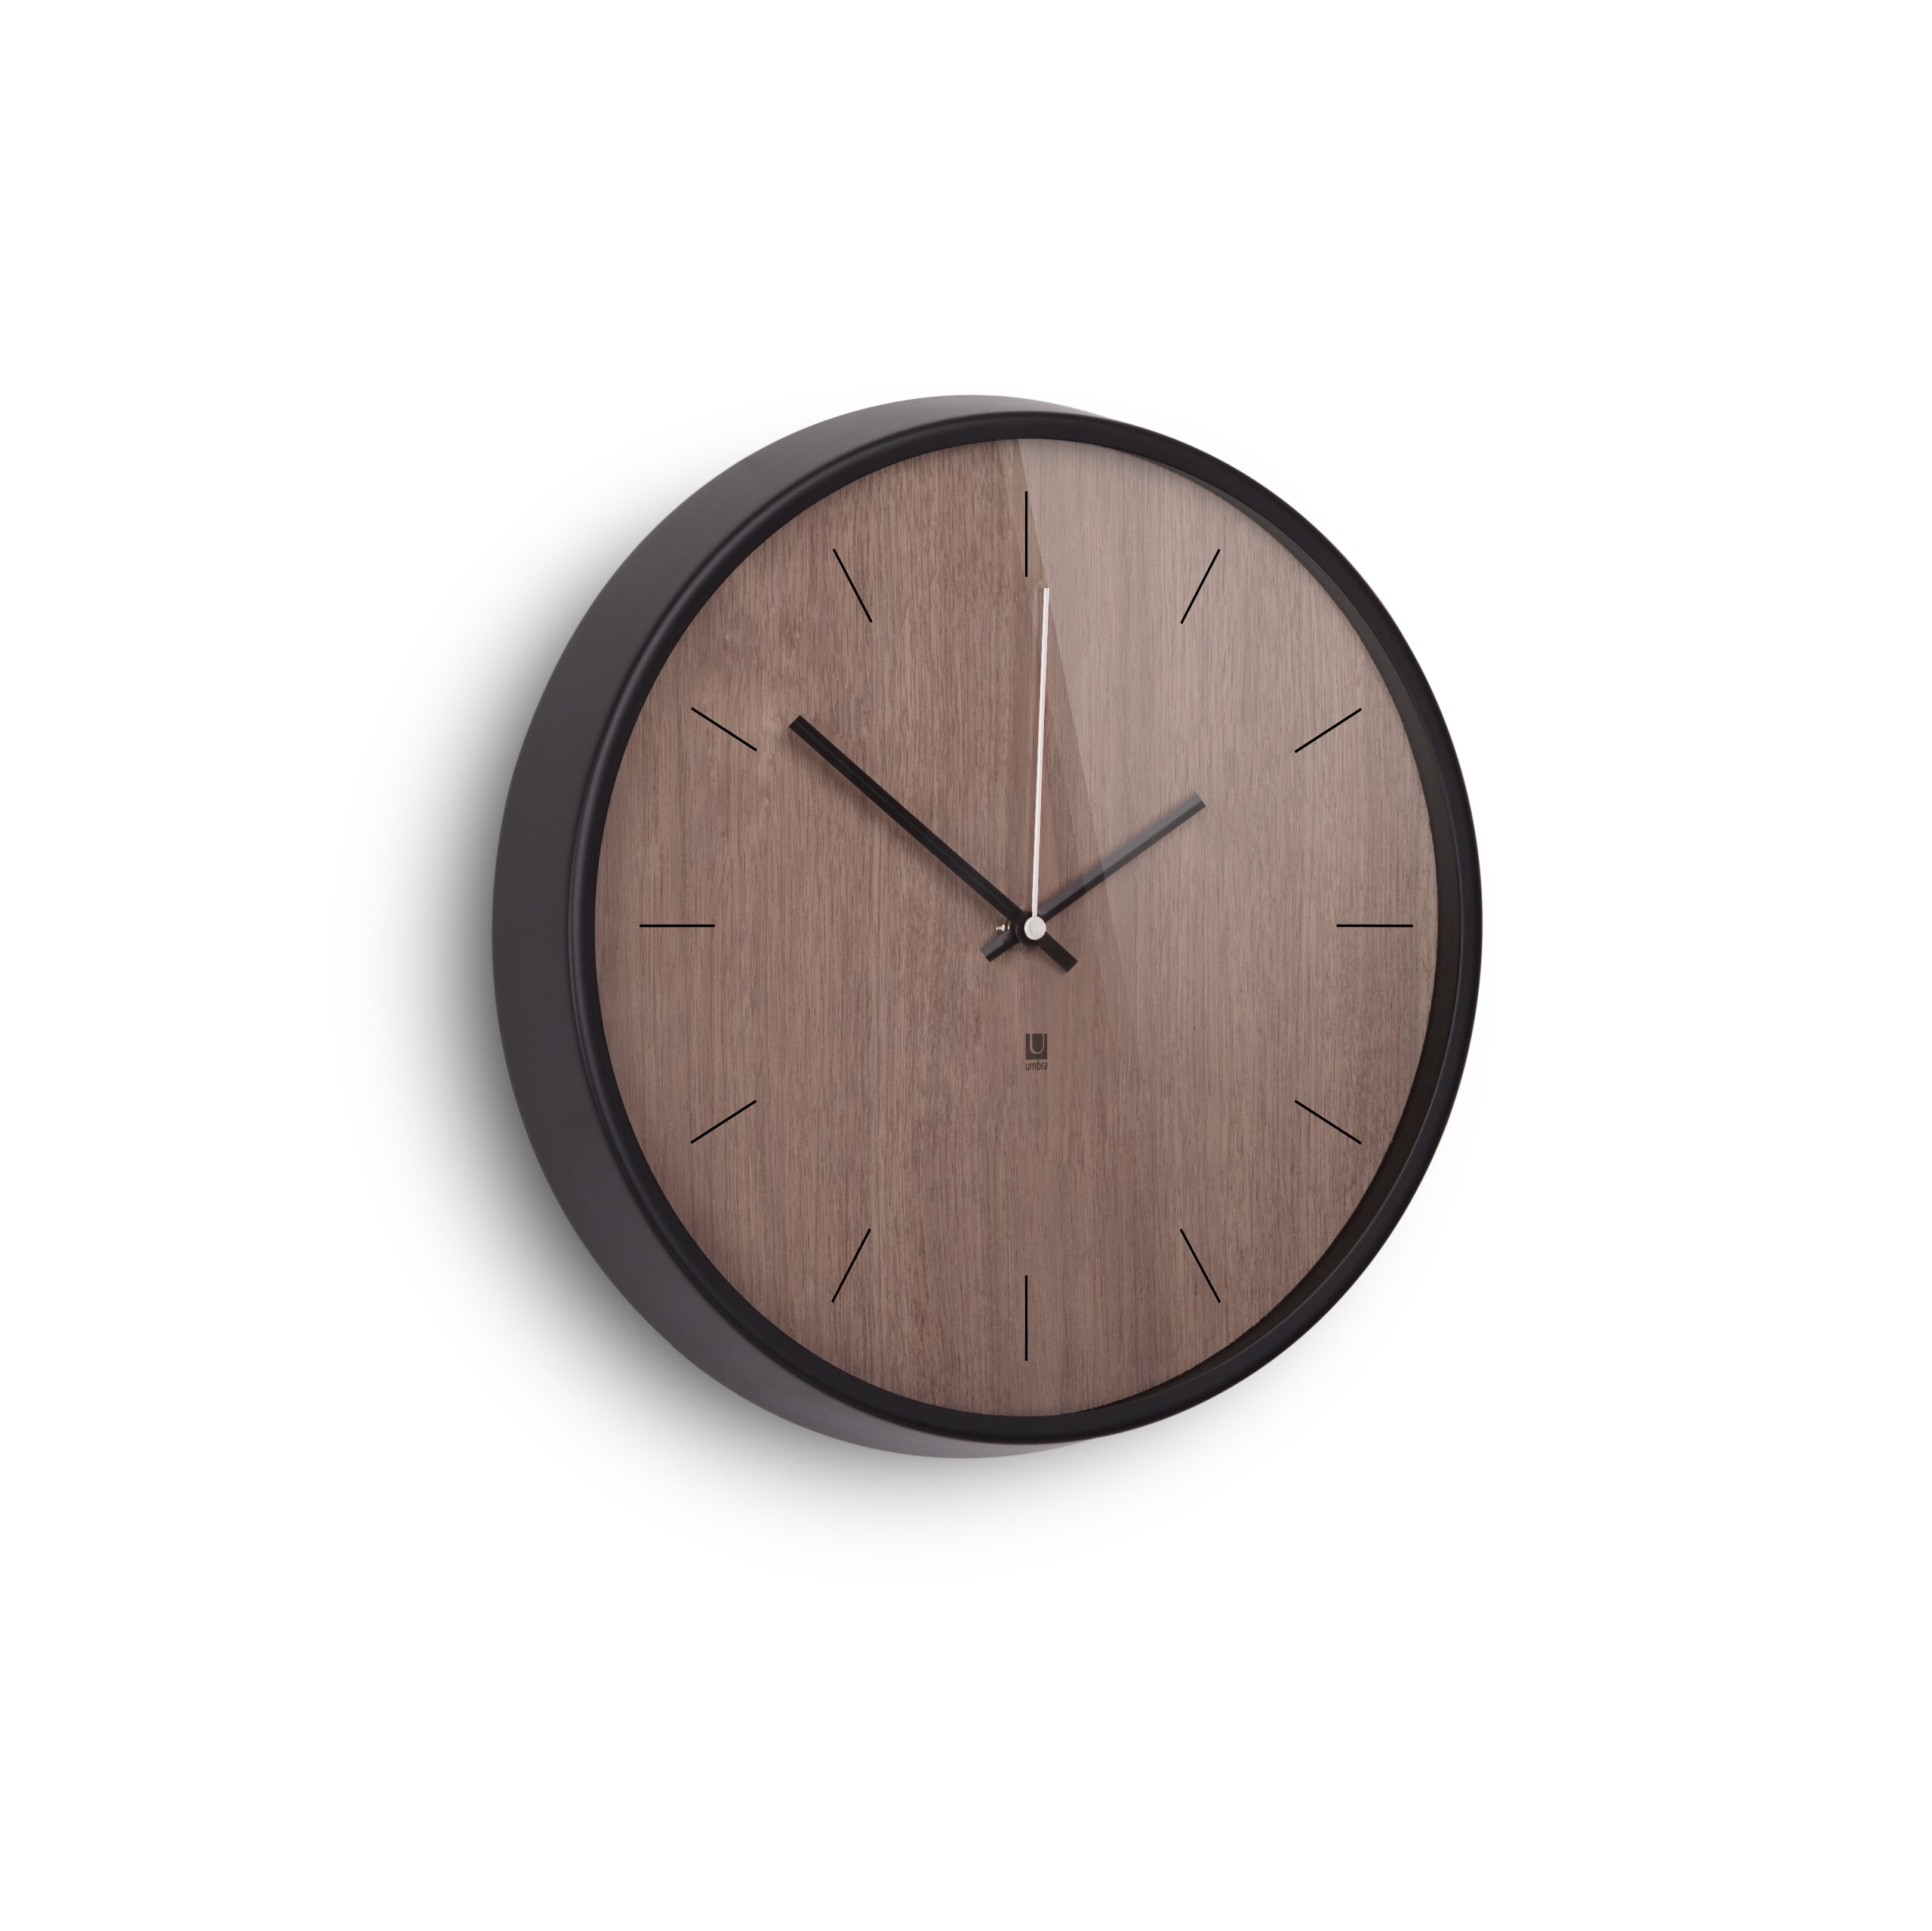 Umbra Madera Wall Clock Walnut Black Wood Design Minimal Modern Contemporary 